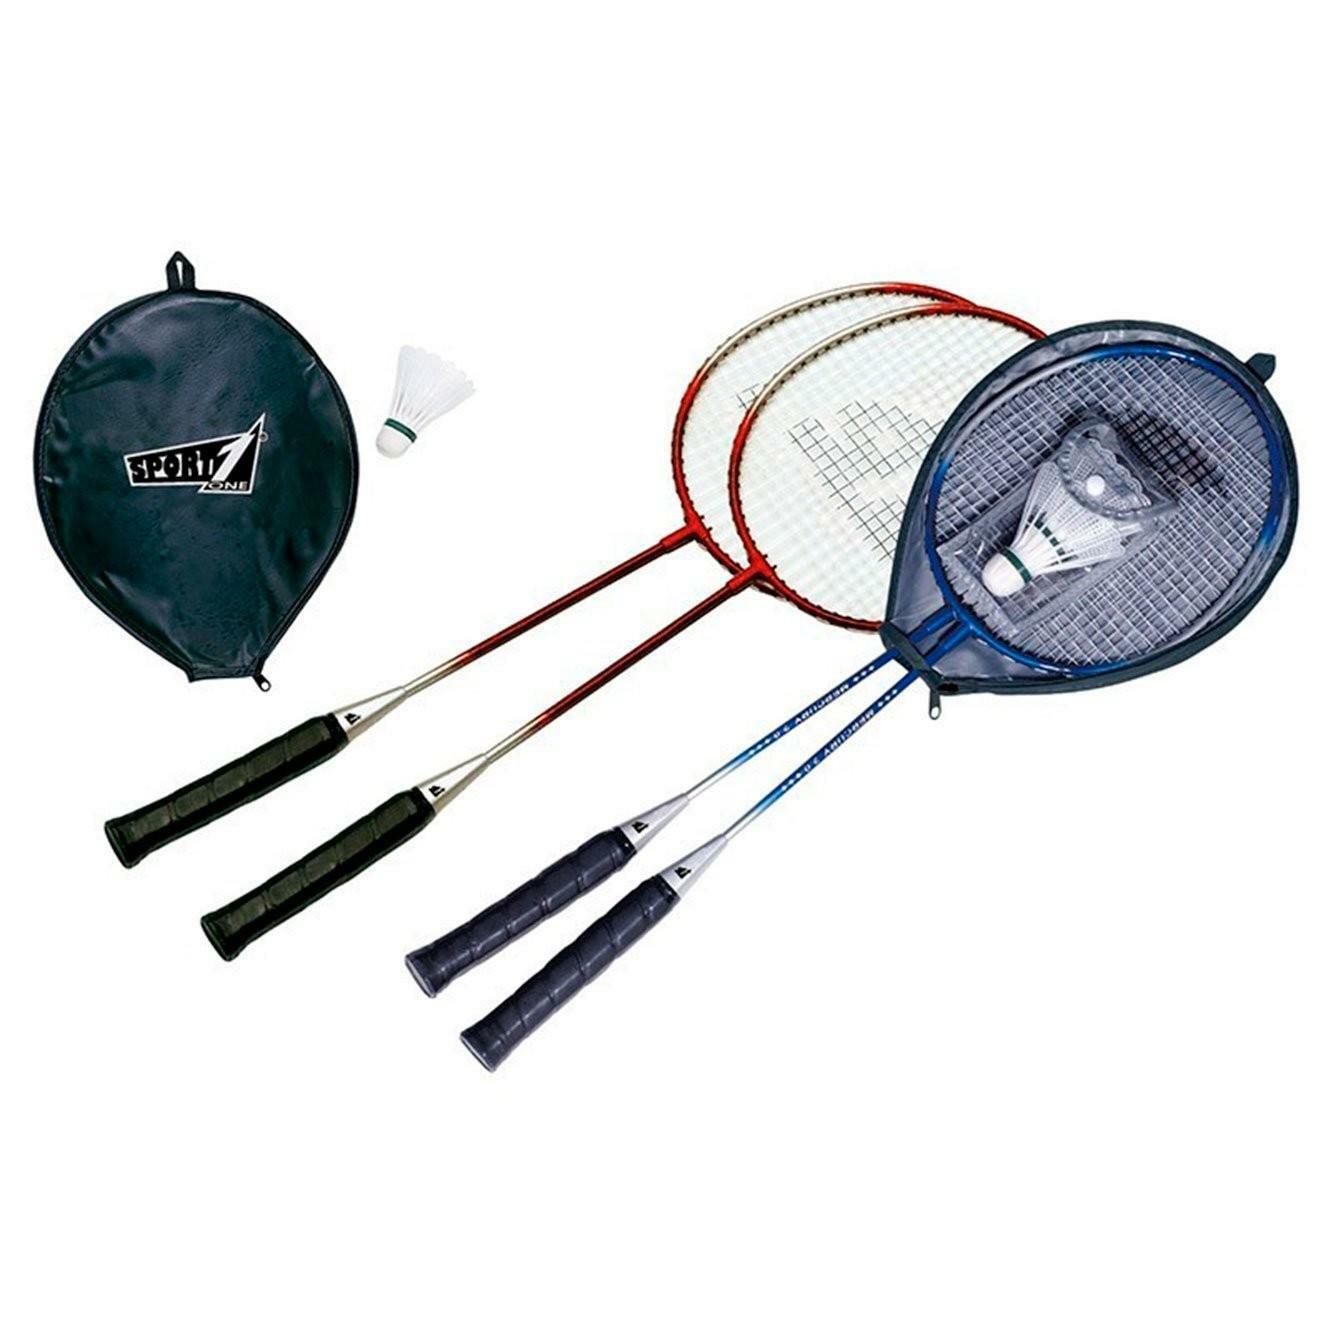 mandelli sport1 set badminton mercury